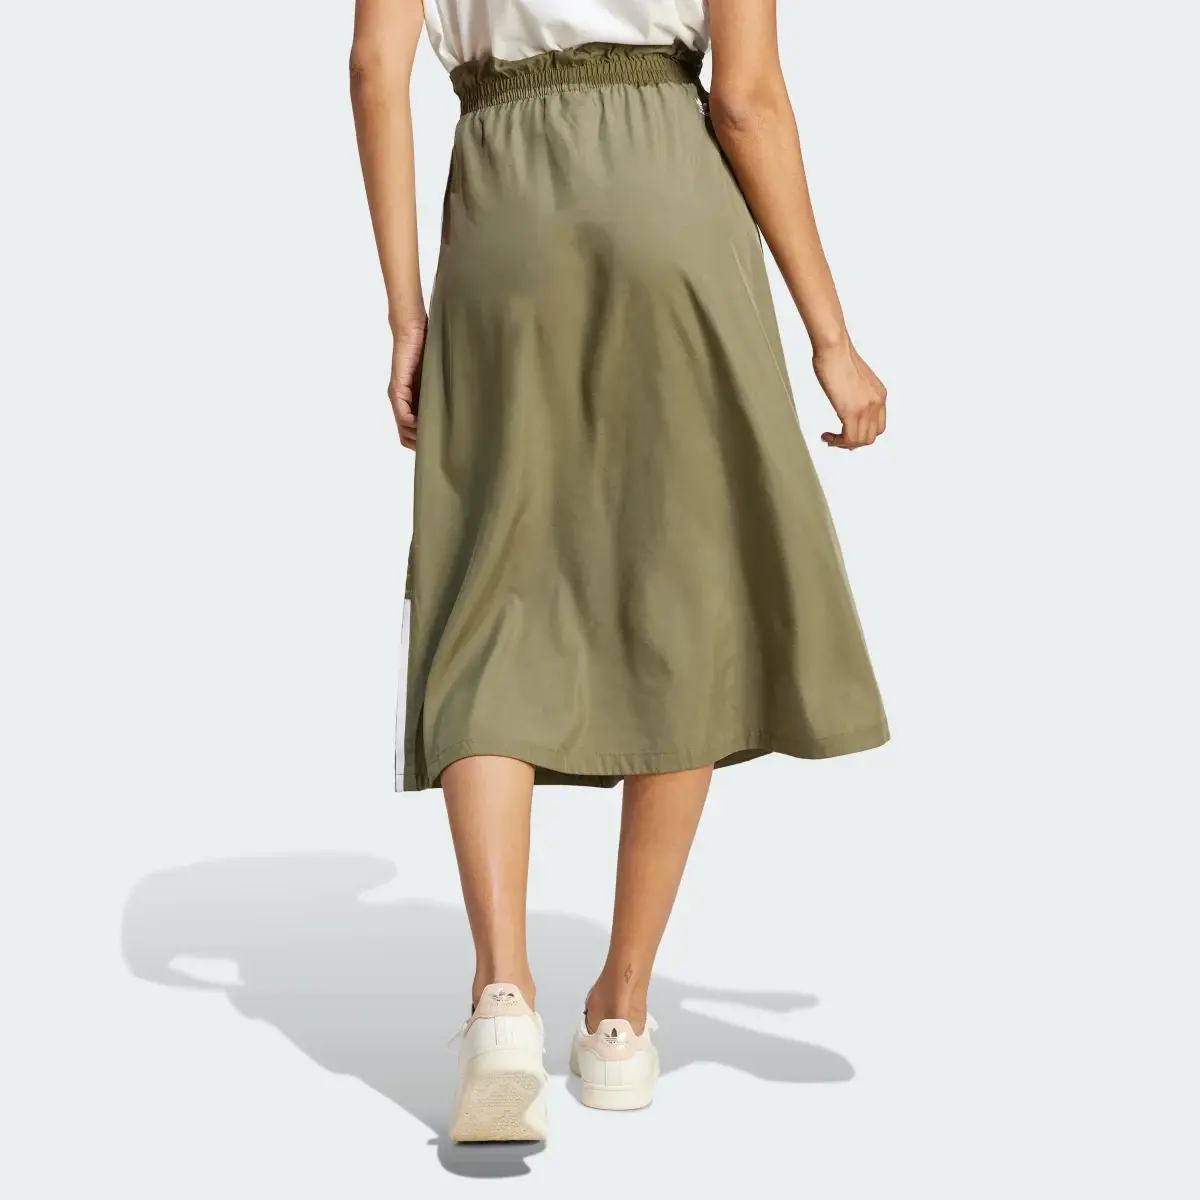 Adidas Parley Skirt. 2